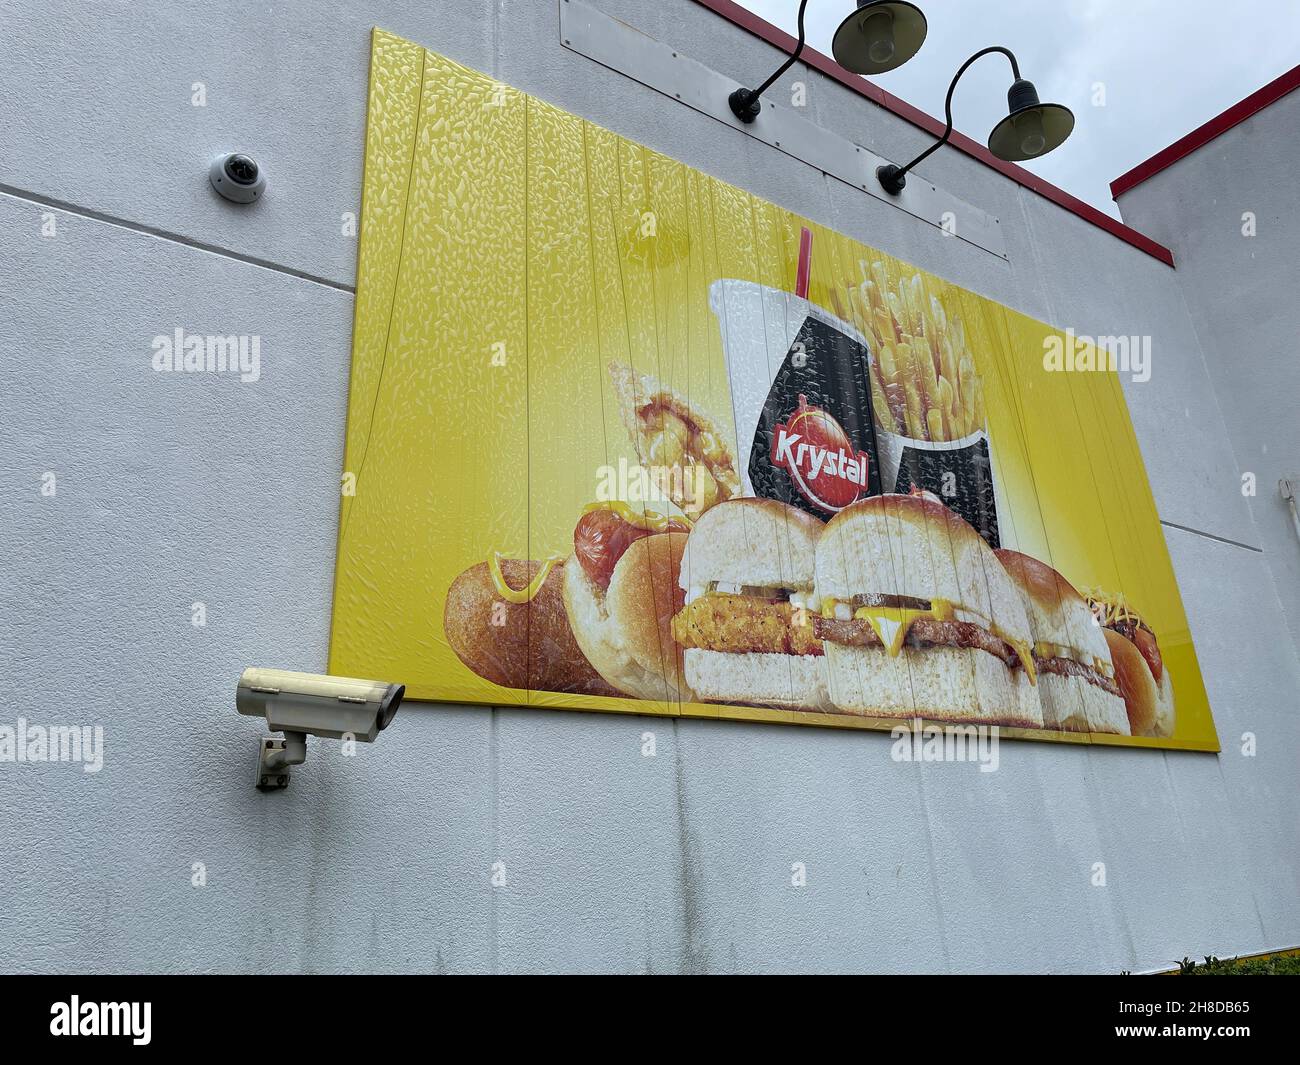 Augusta, Ga USA - 06 25 21: Krystal burgers restaurant wall art of food Stock Photo